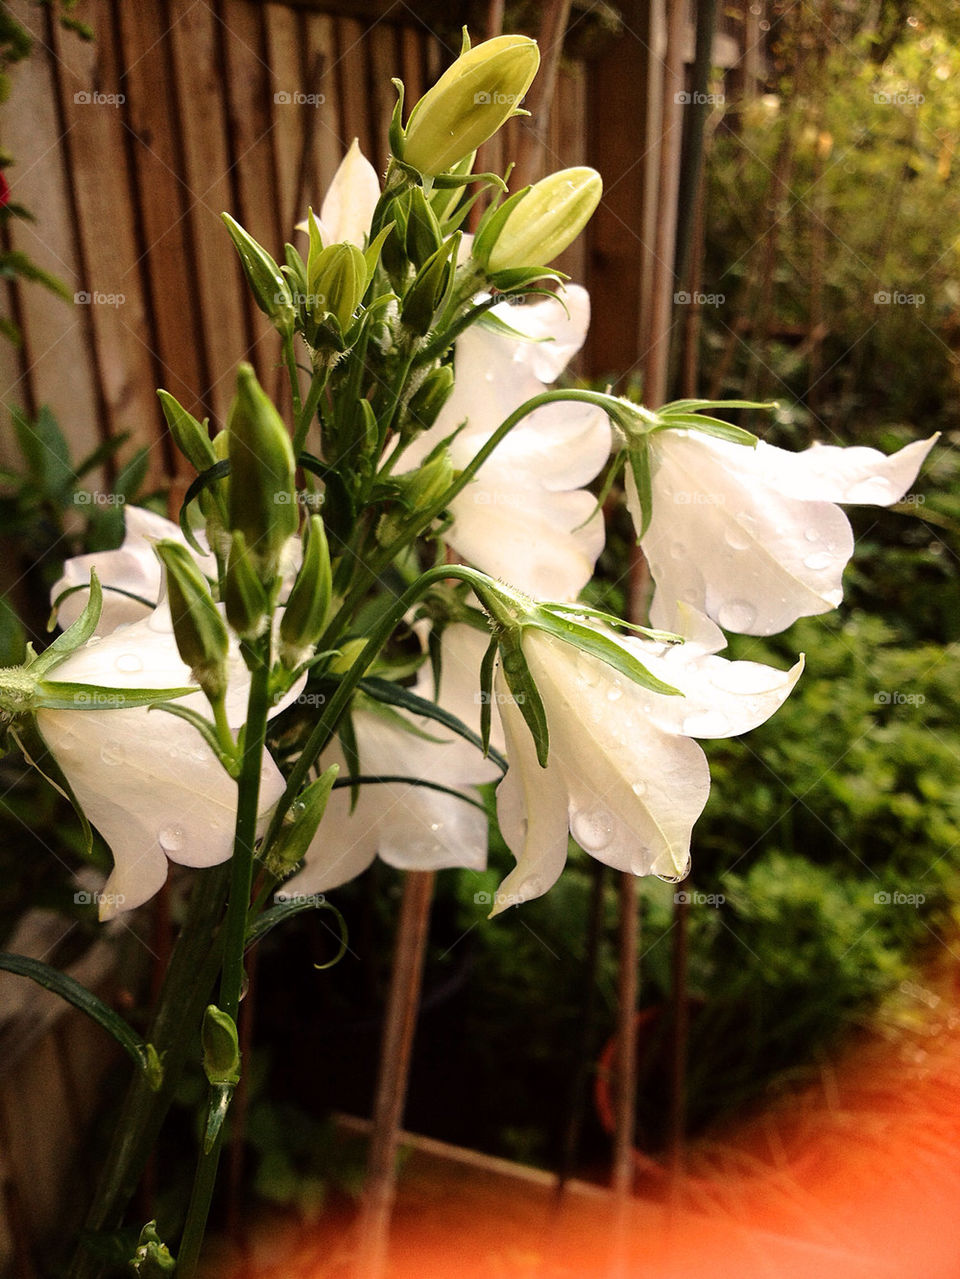 garden pretty flower white by tanushri123